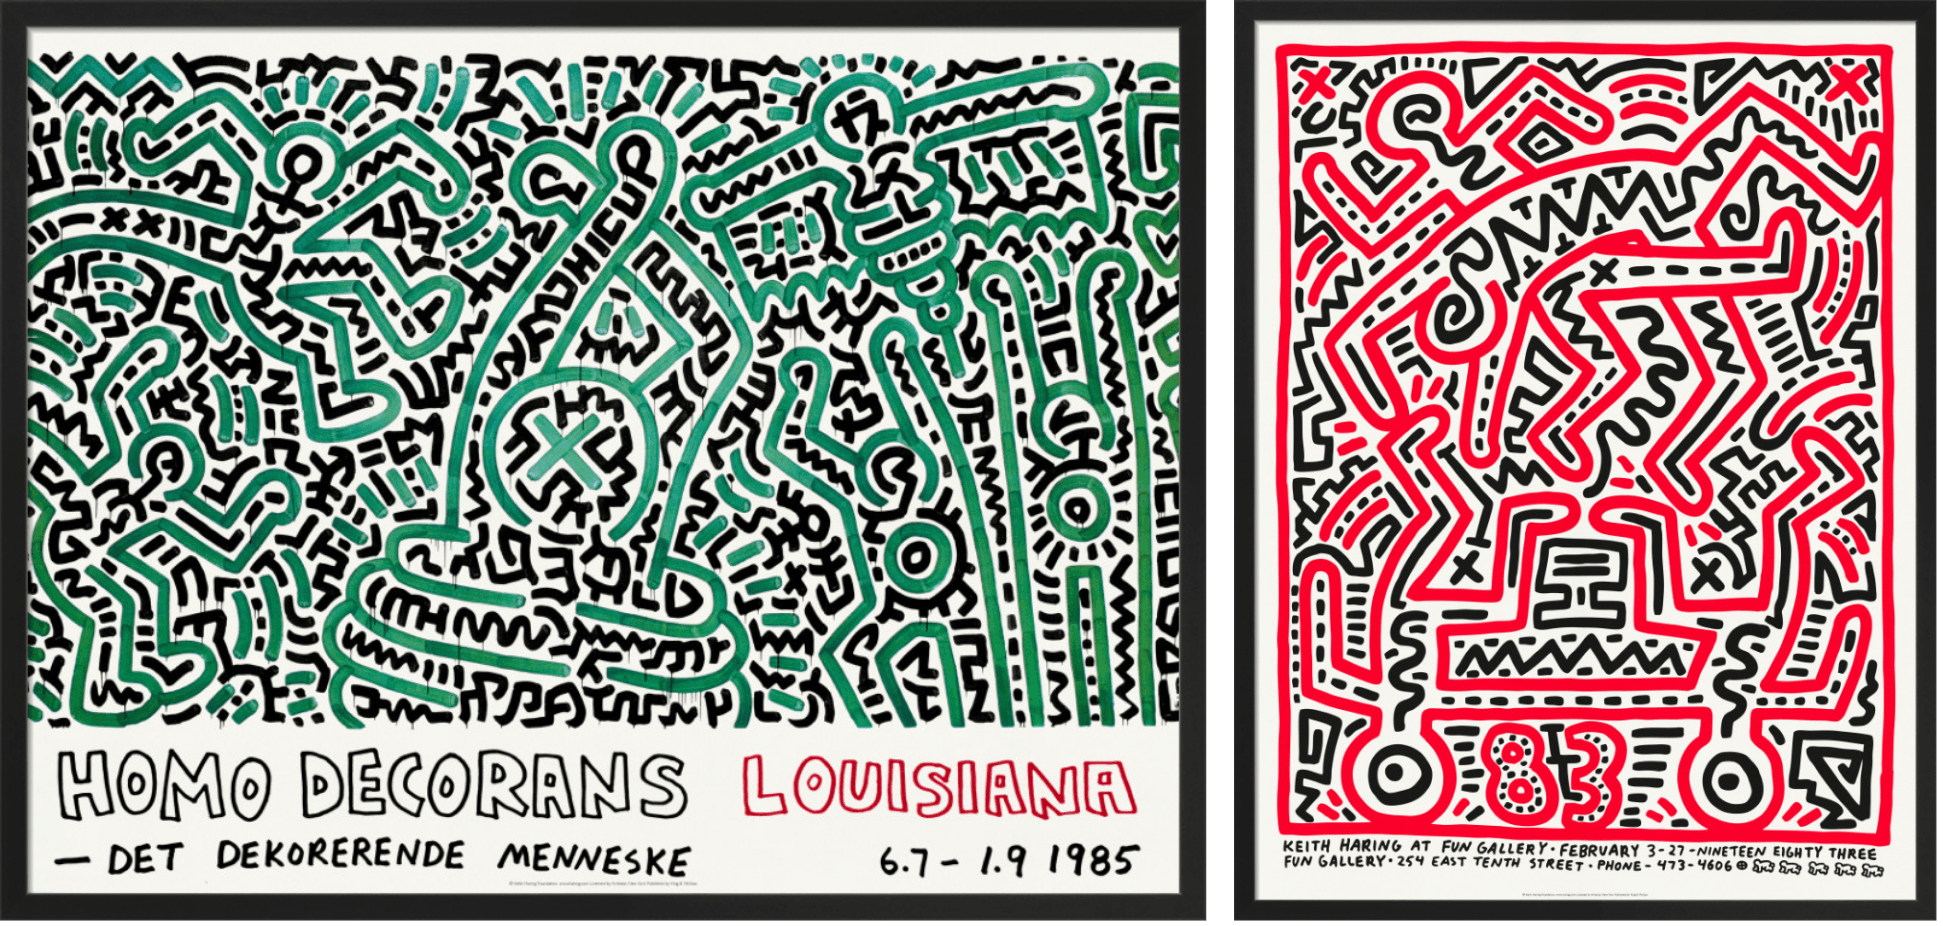 'Homo Decorians Louisiana 1985' and 'Keith Haring at Fun Gallery 1983', © Keith Haring Foundation, licensed by Artestar New York